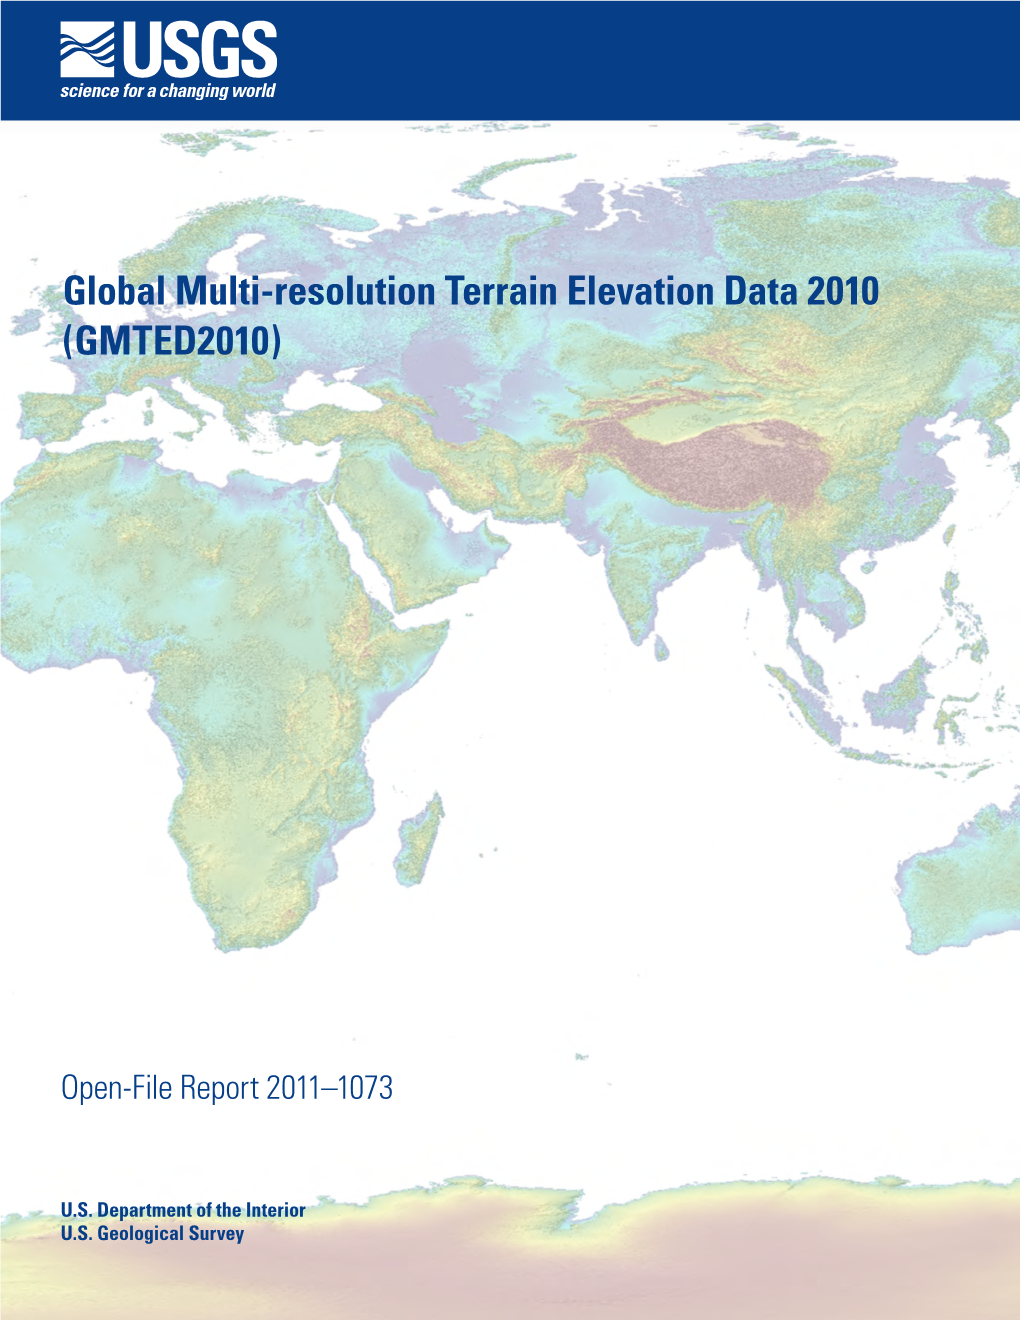 Global Multi-Resolution Terrain Elevation Data 2010 (GMTED2010)